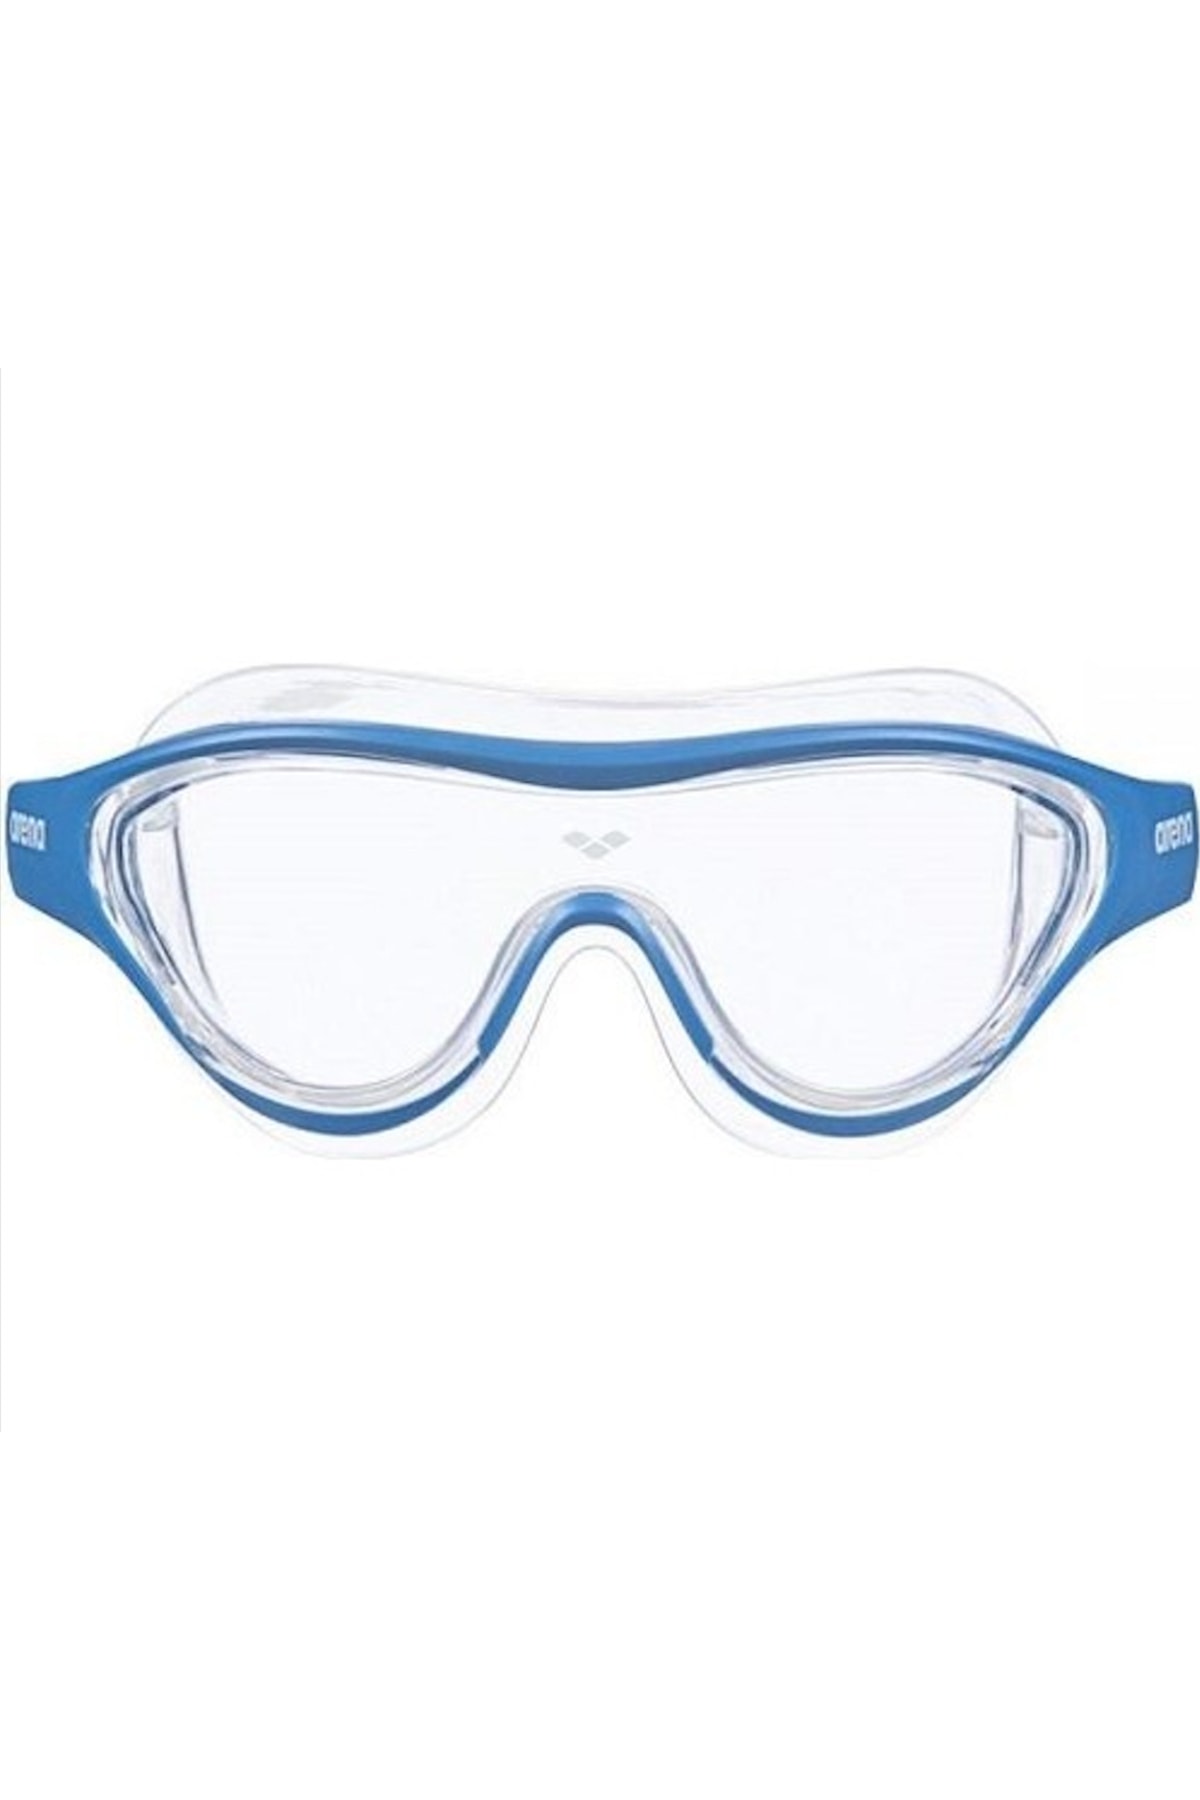 Arena عینک شنای تک ماسک آبی شفاف-آبی-سفید